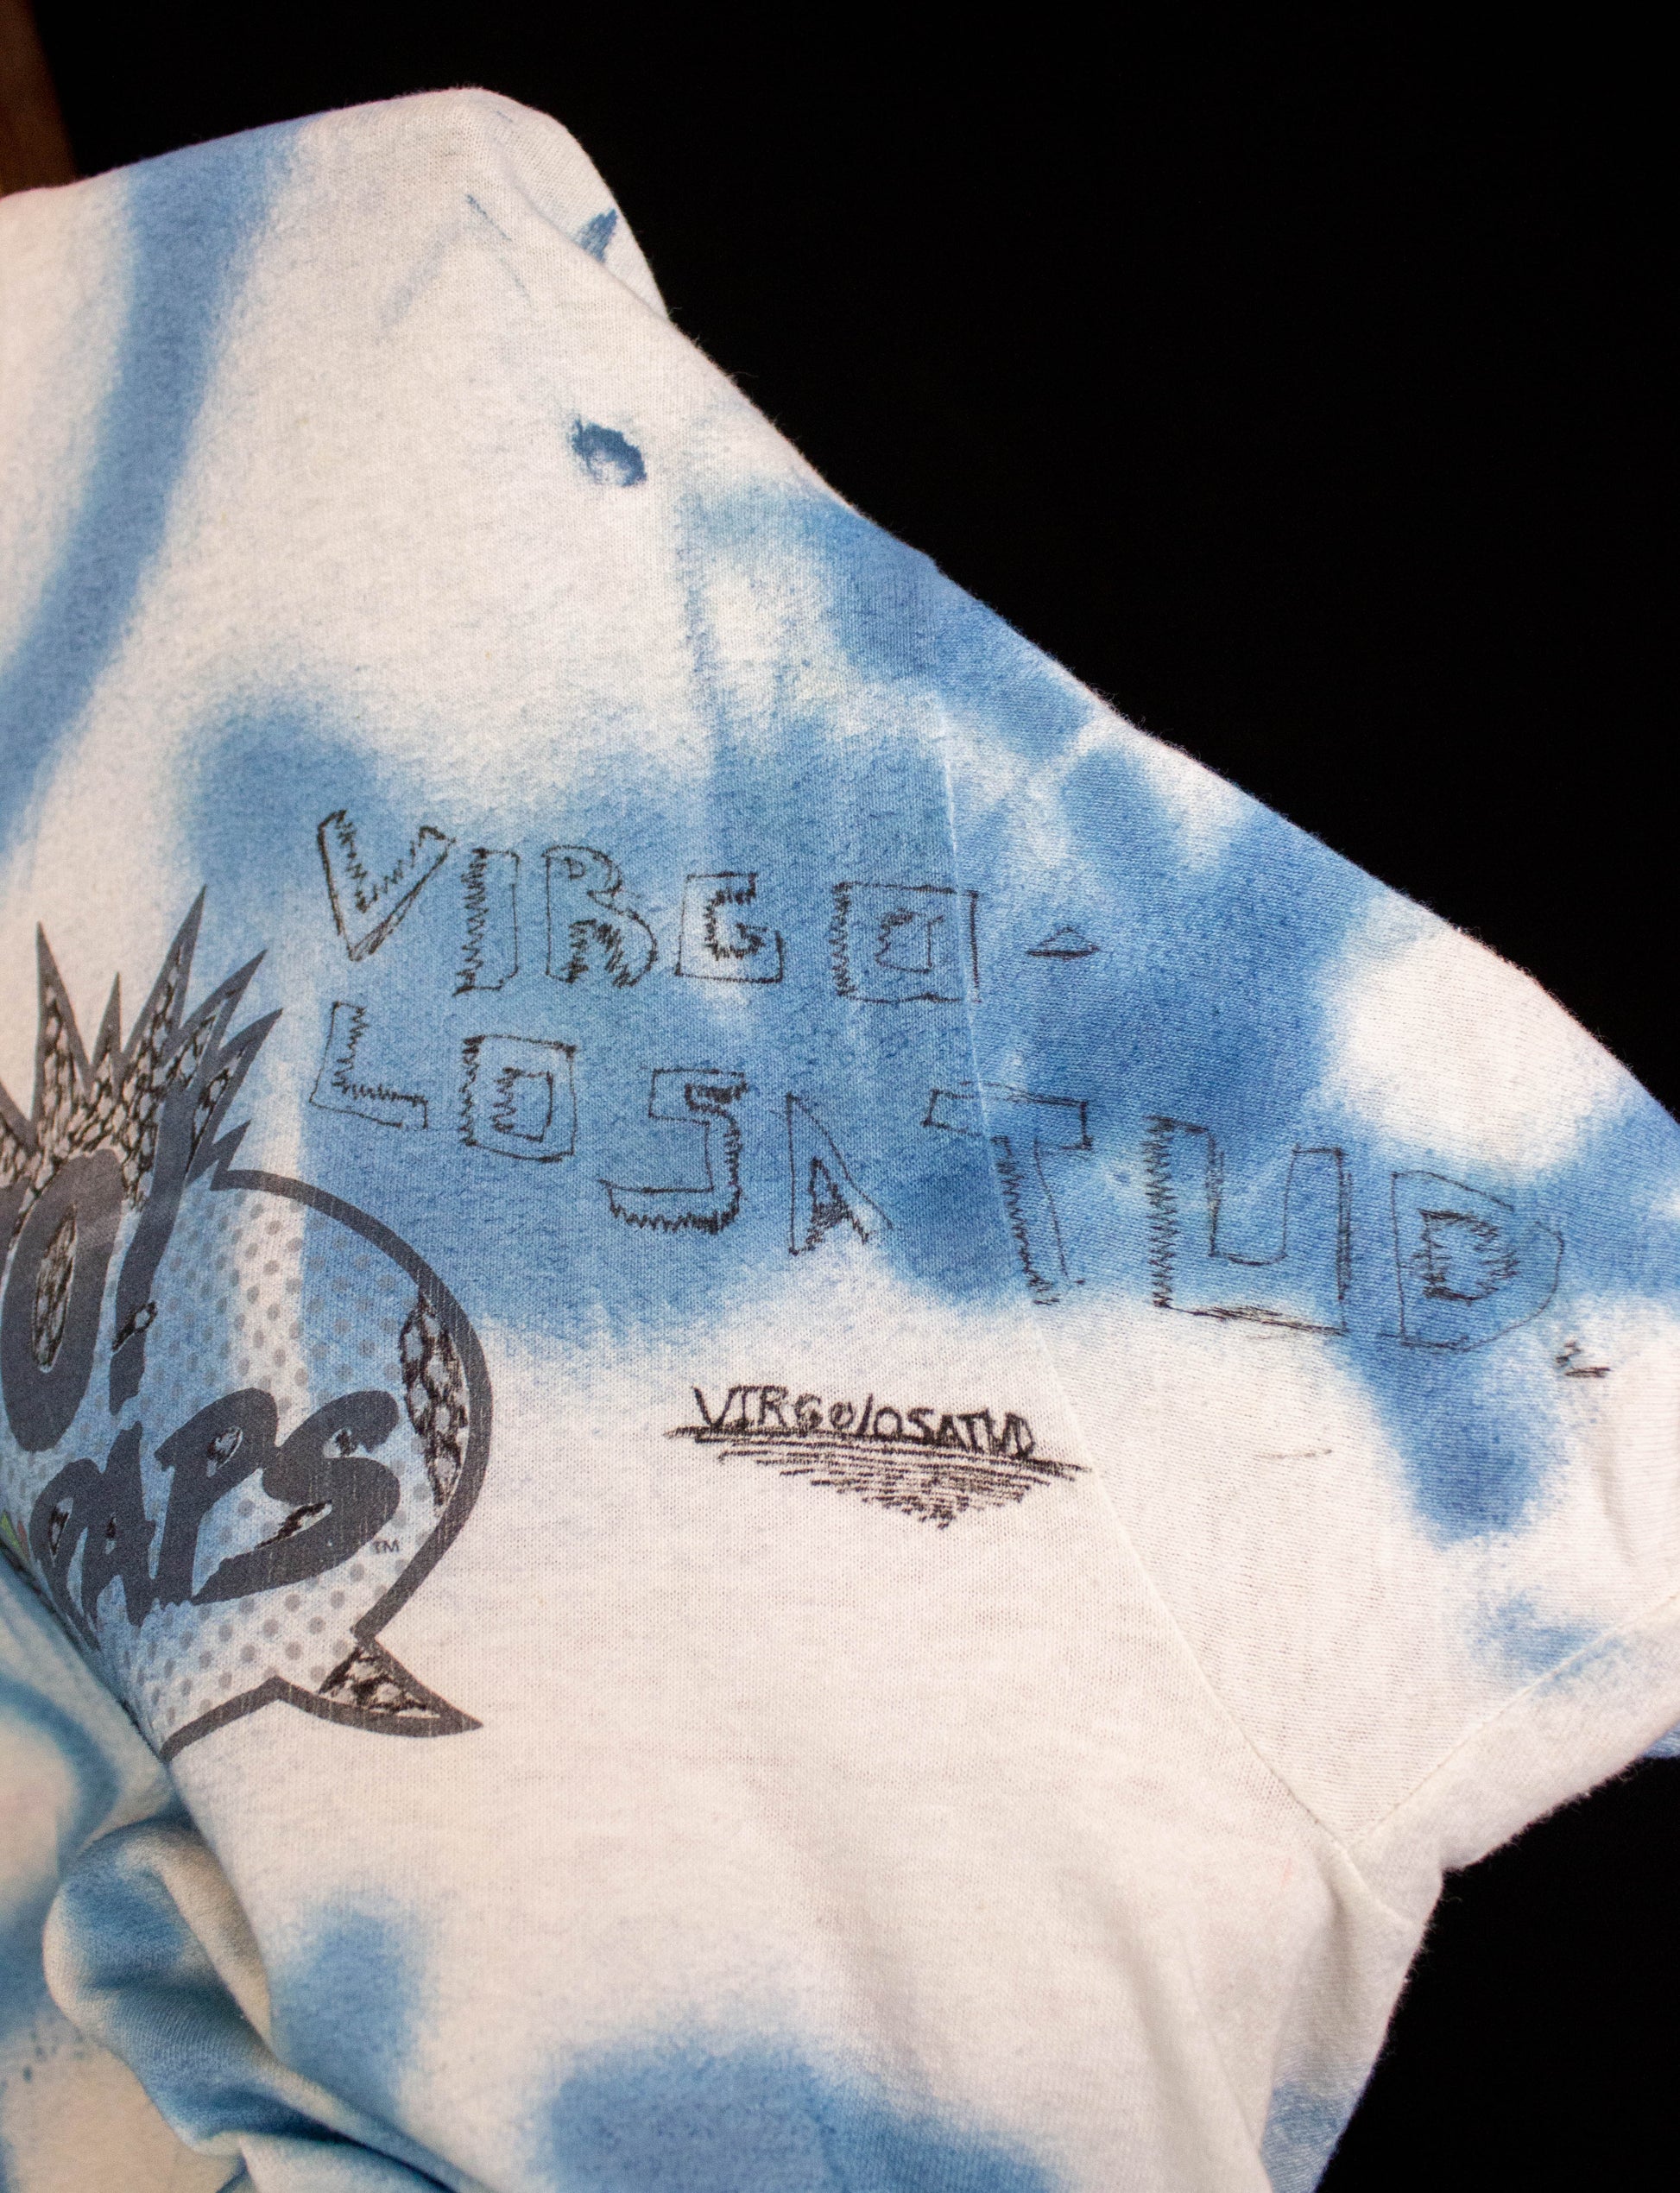 Vintage 1996 Yo! MTV Raps Customized Graphic T Shirt White and Blue Large